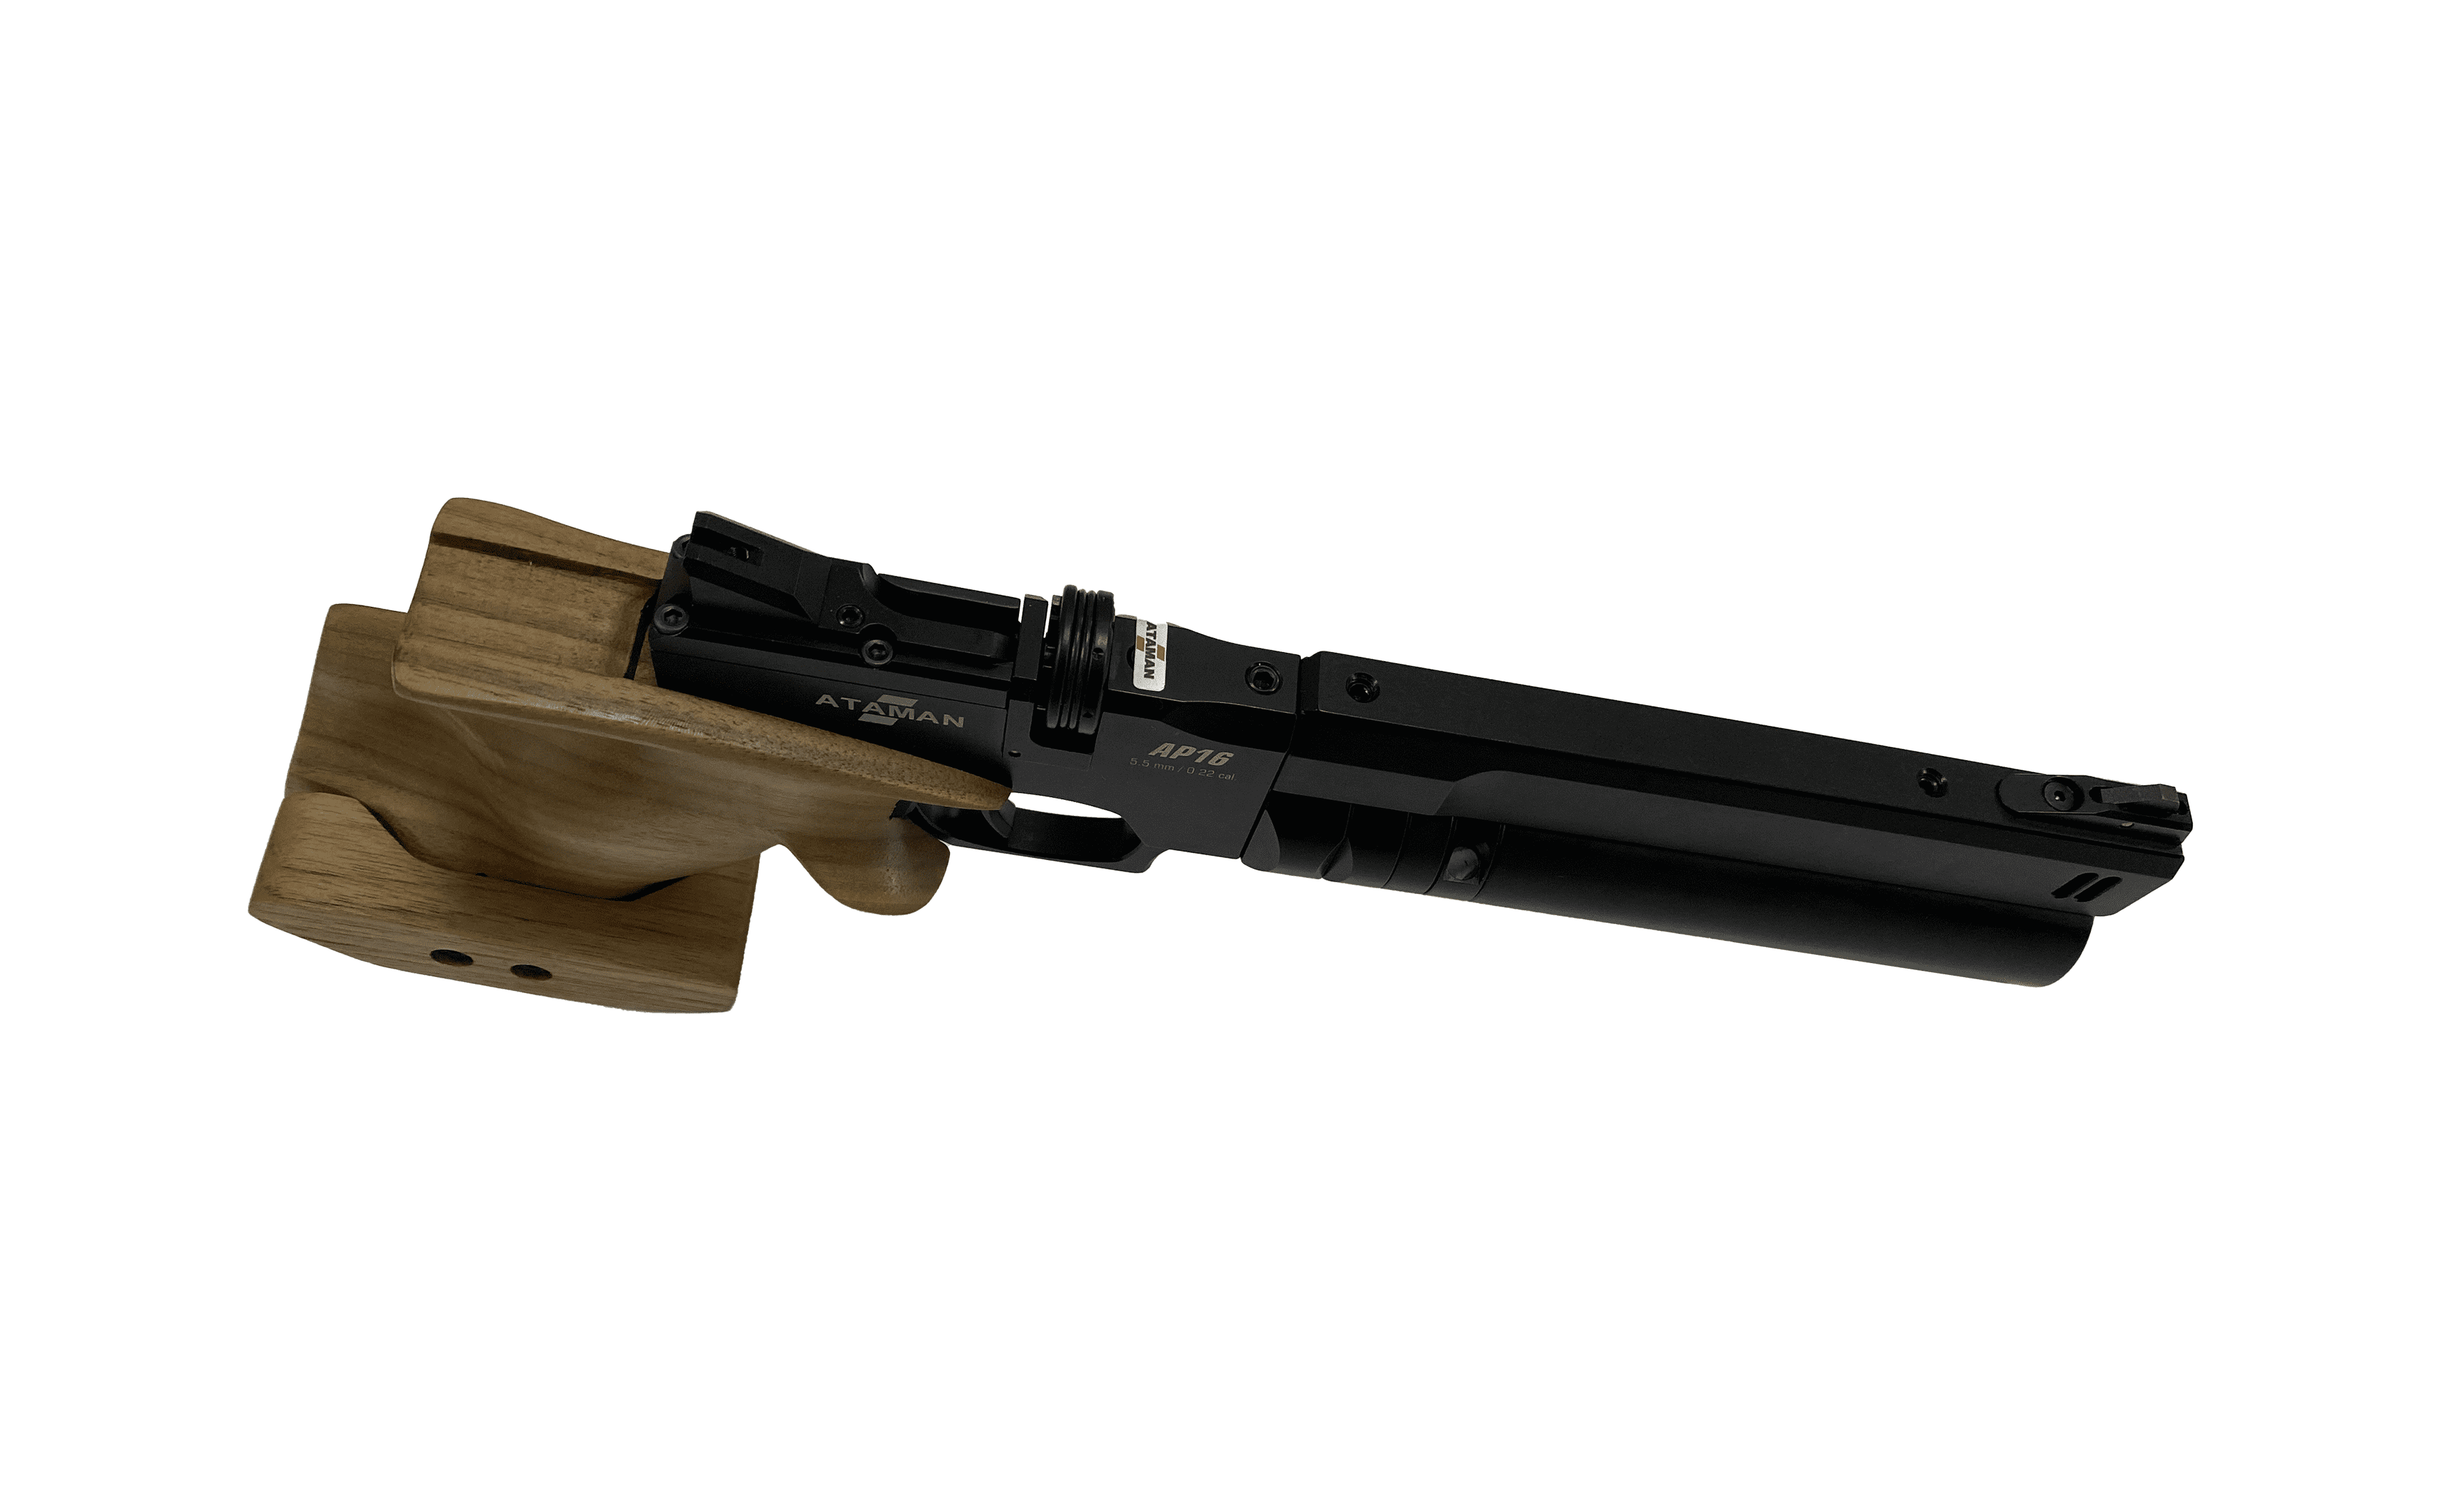 Пневматический PCP пистолет ATAMAN AP16 Black Compact (рукоятка Walnut SP), кал. 5.5мм